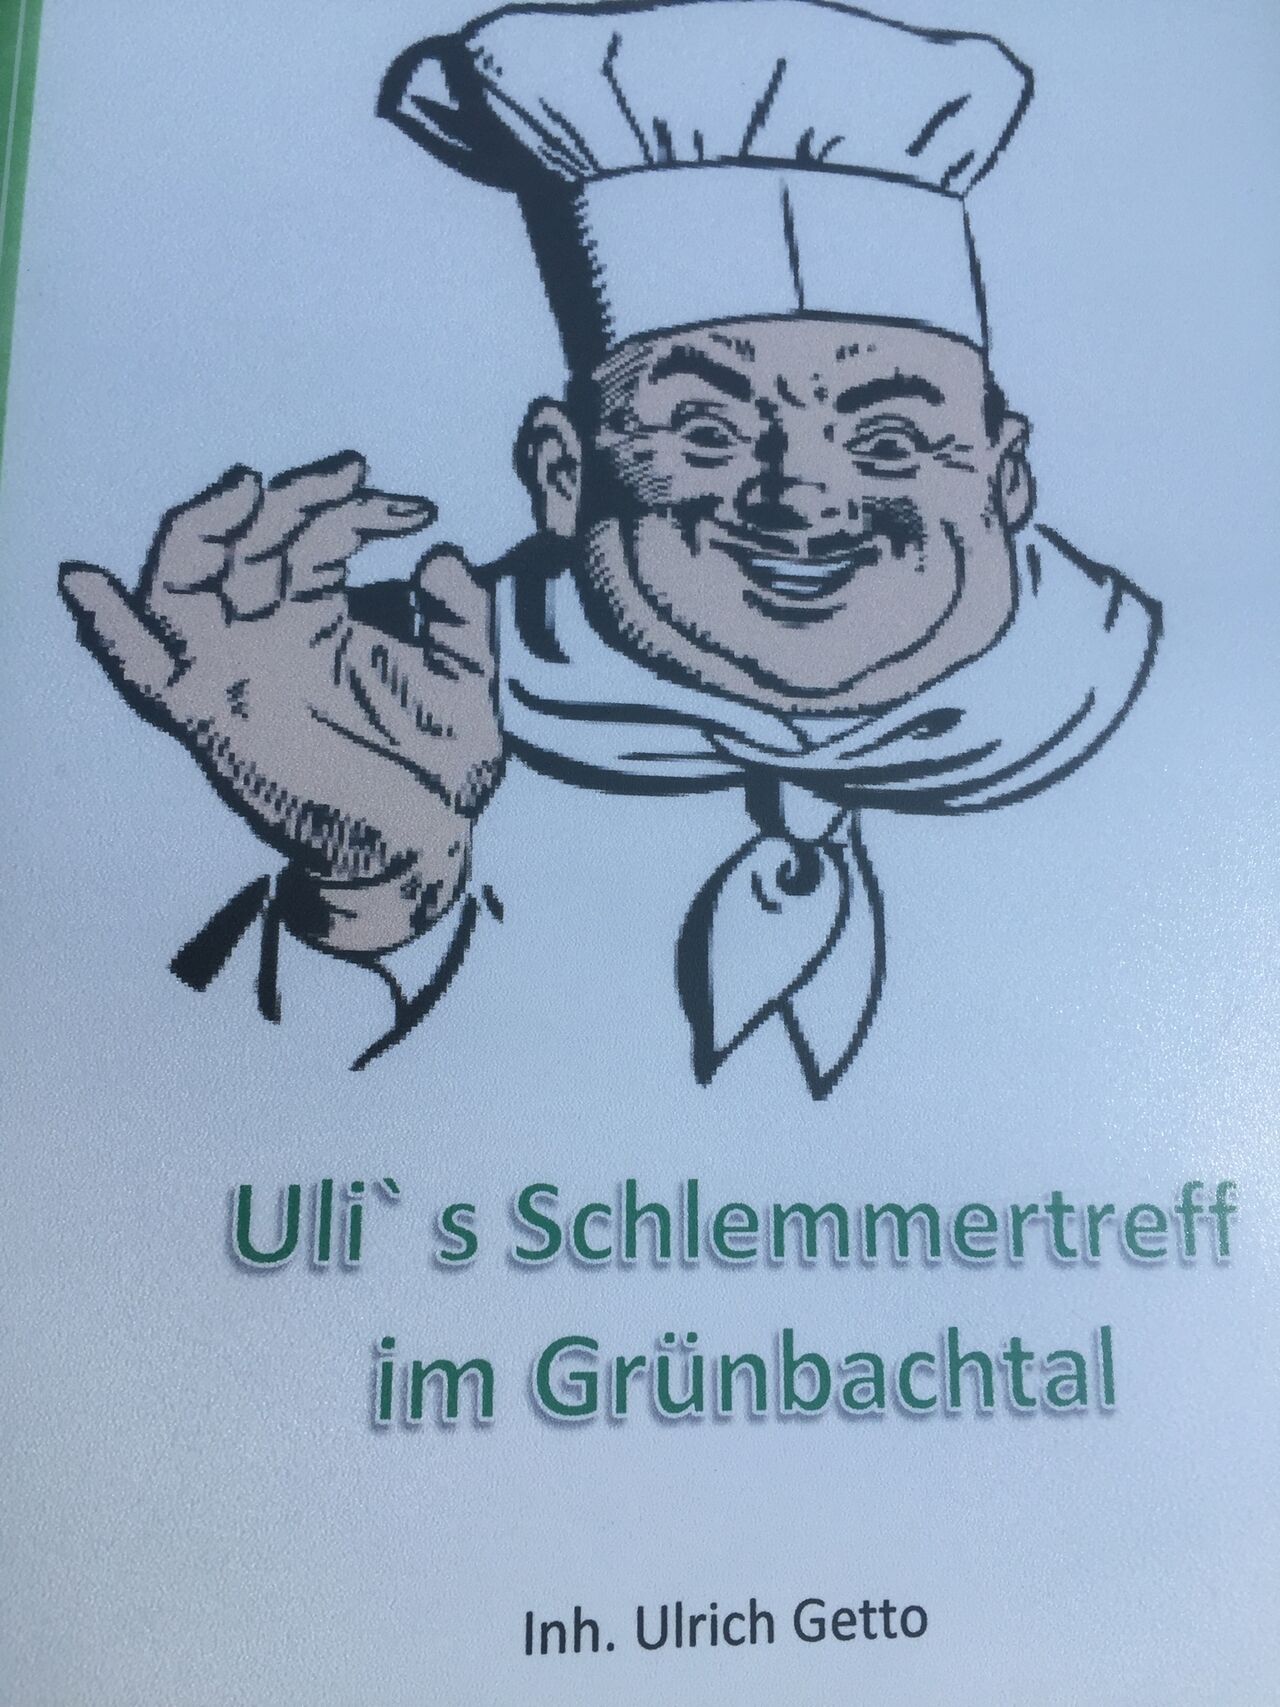 A photo of Uli's Schlemmertreff